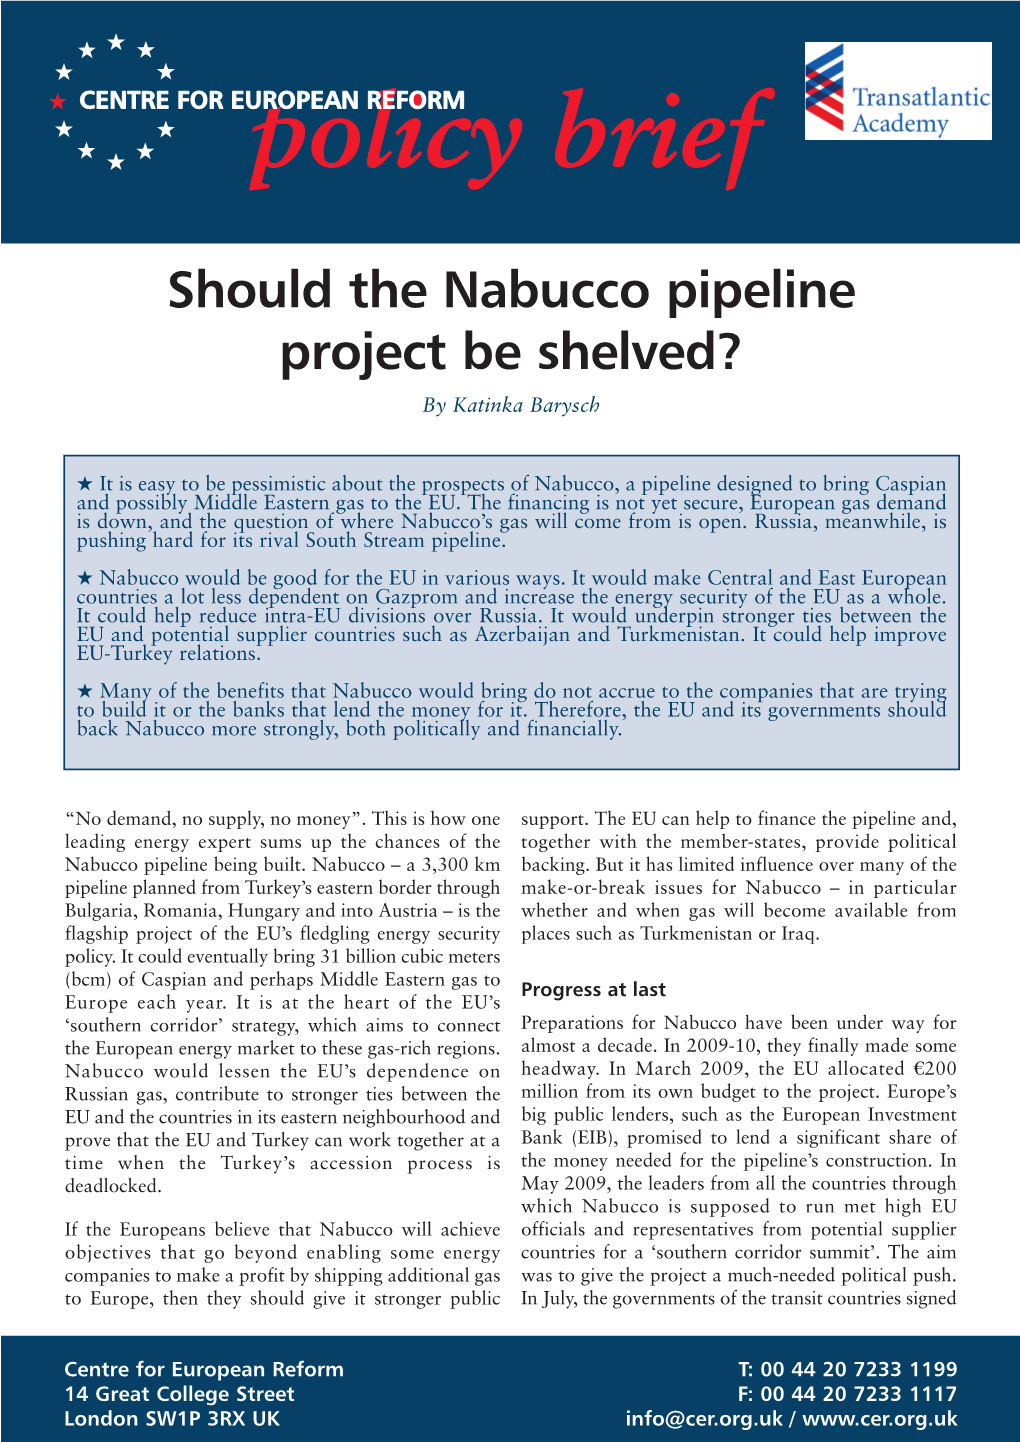 Should the Nabucco Pipeline Project Be Shelved? by Katinka Barysch